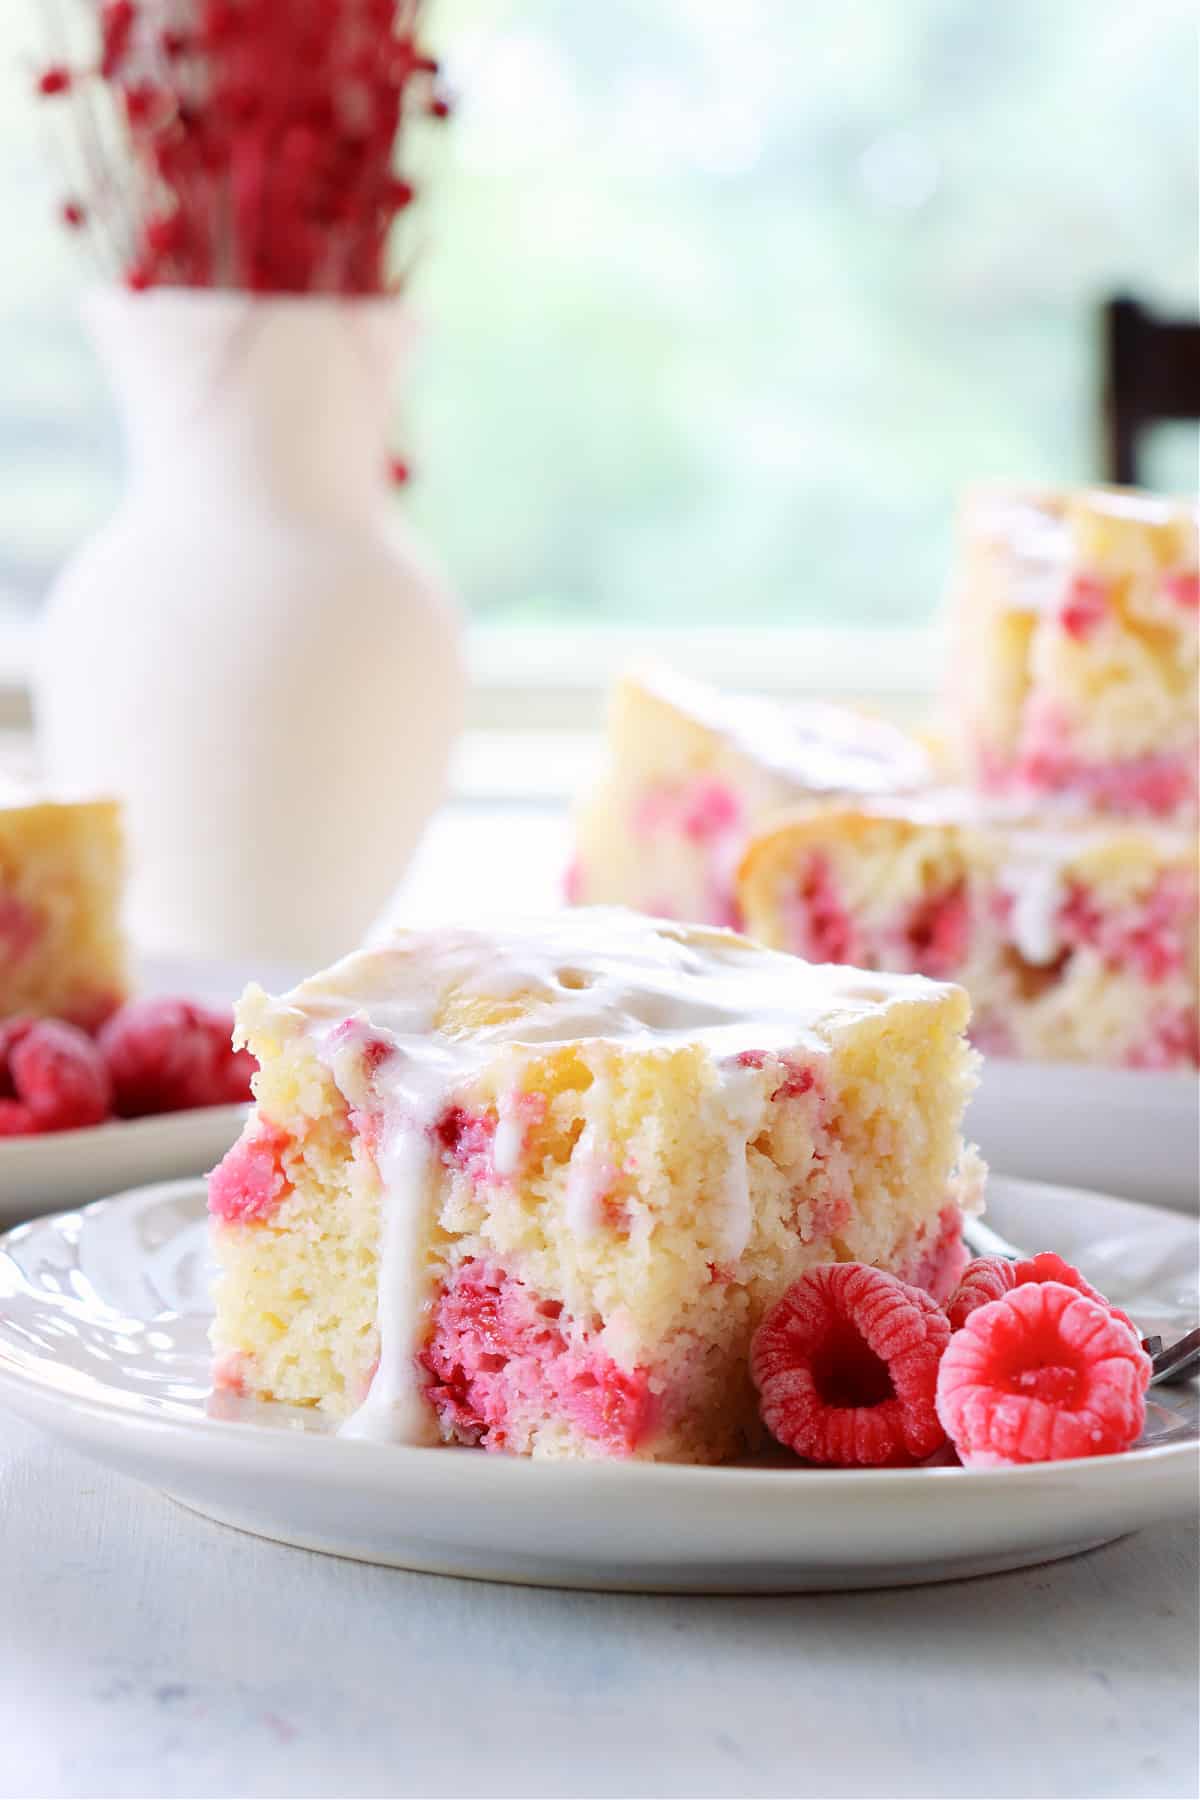 Slice of raspberry cake on a plate.